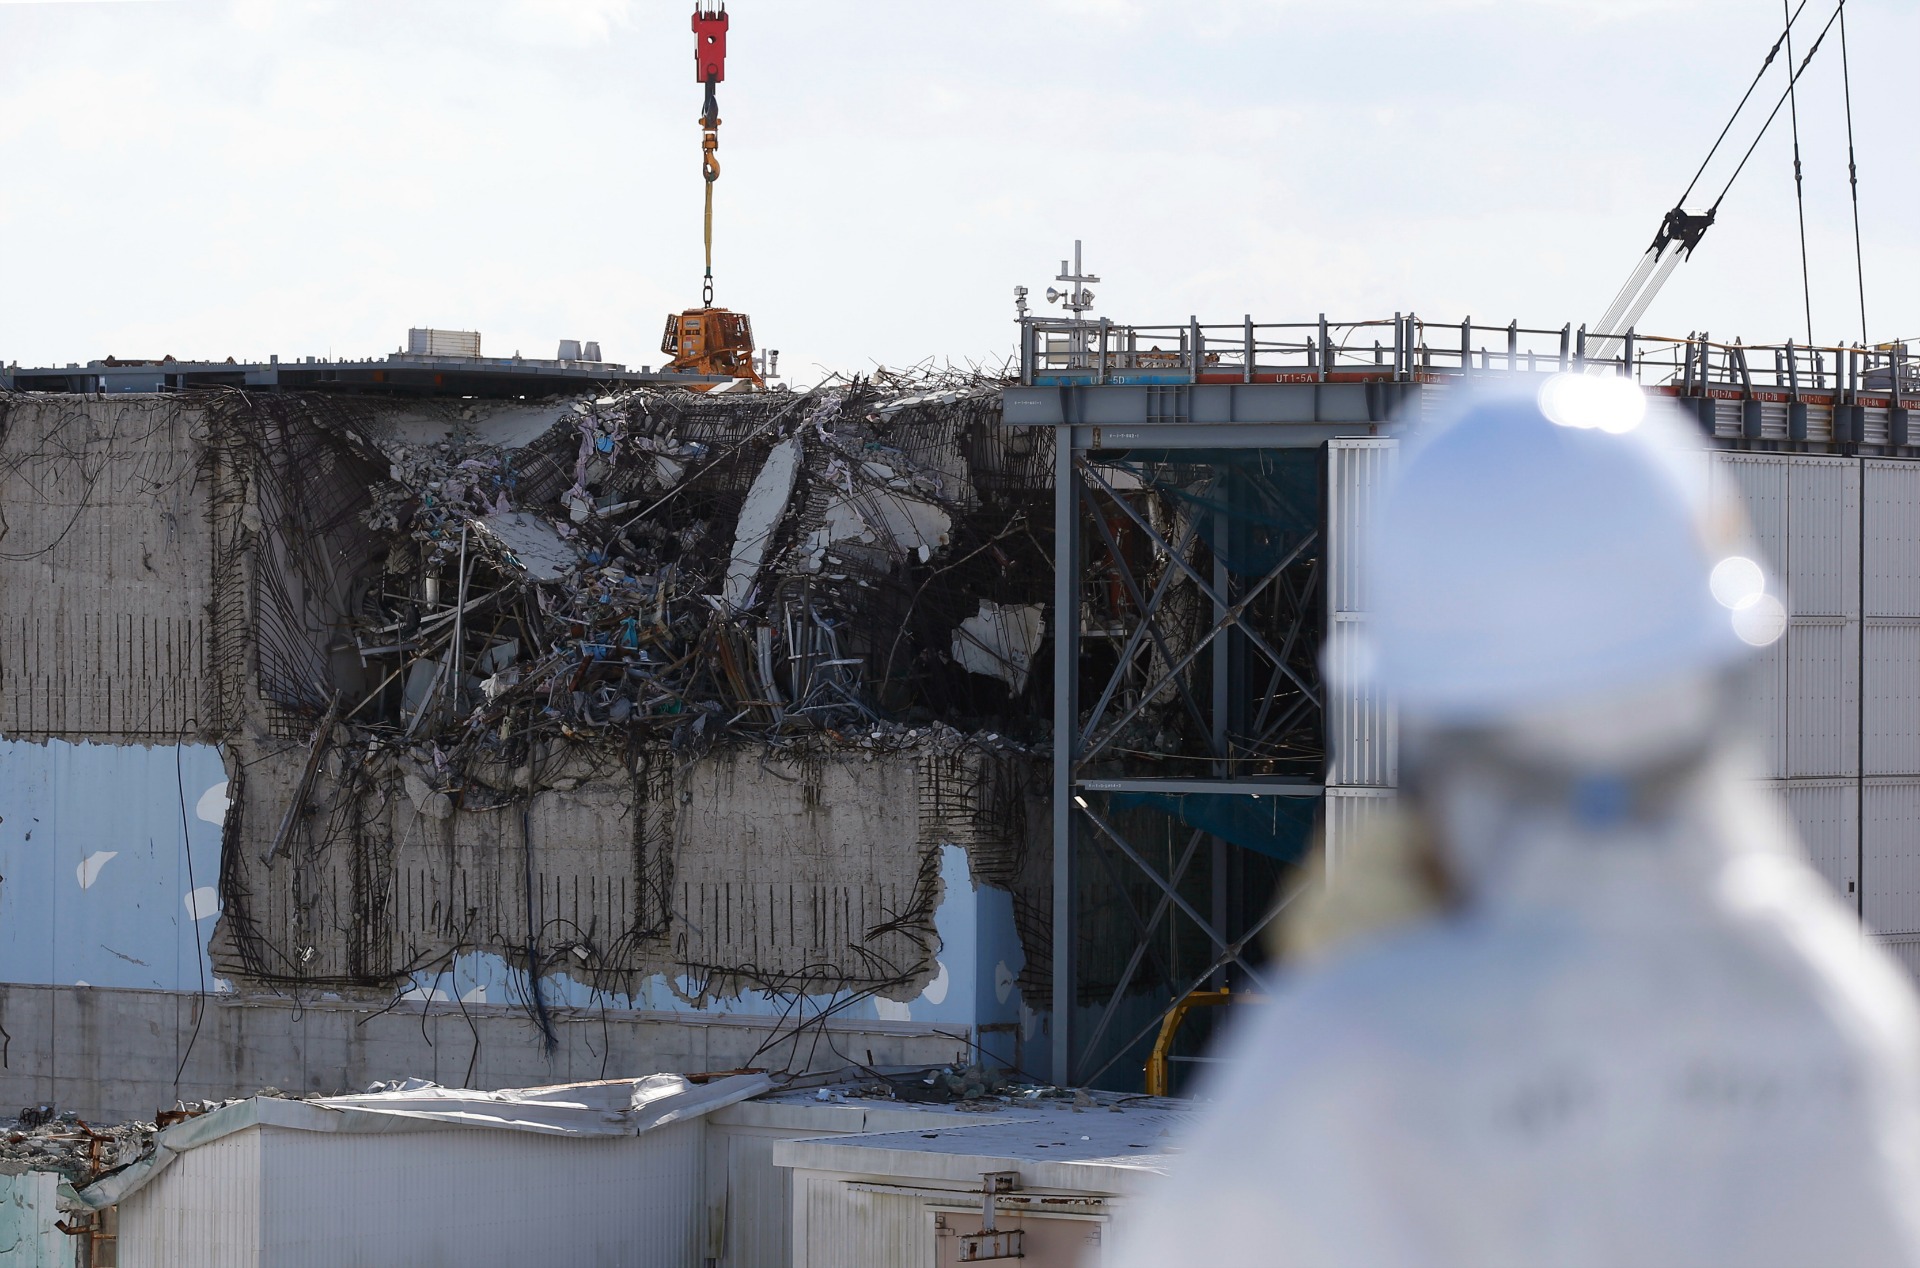 La central nuclear de Fukushima alcanza niveles récord de radiación